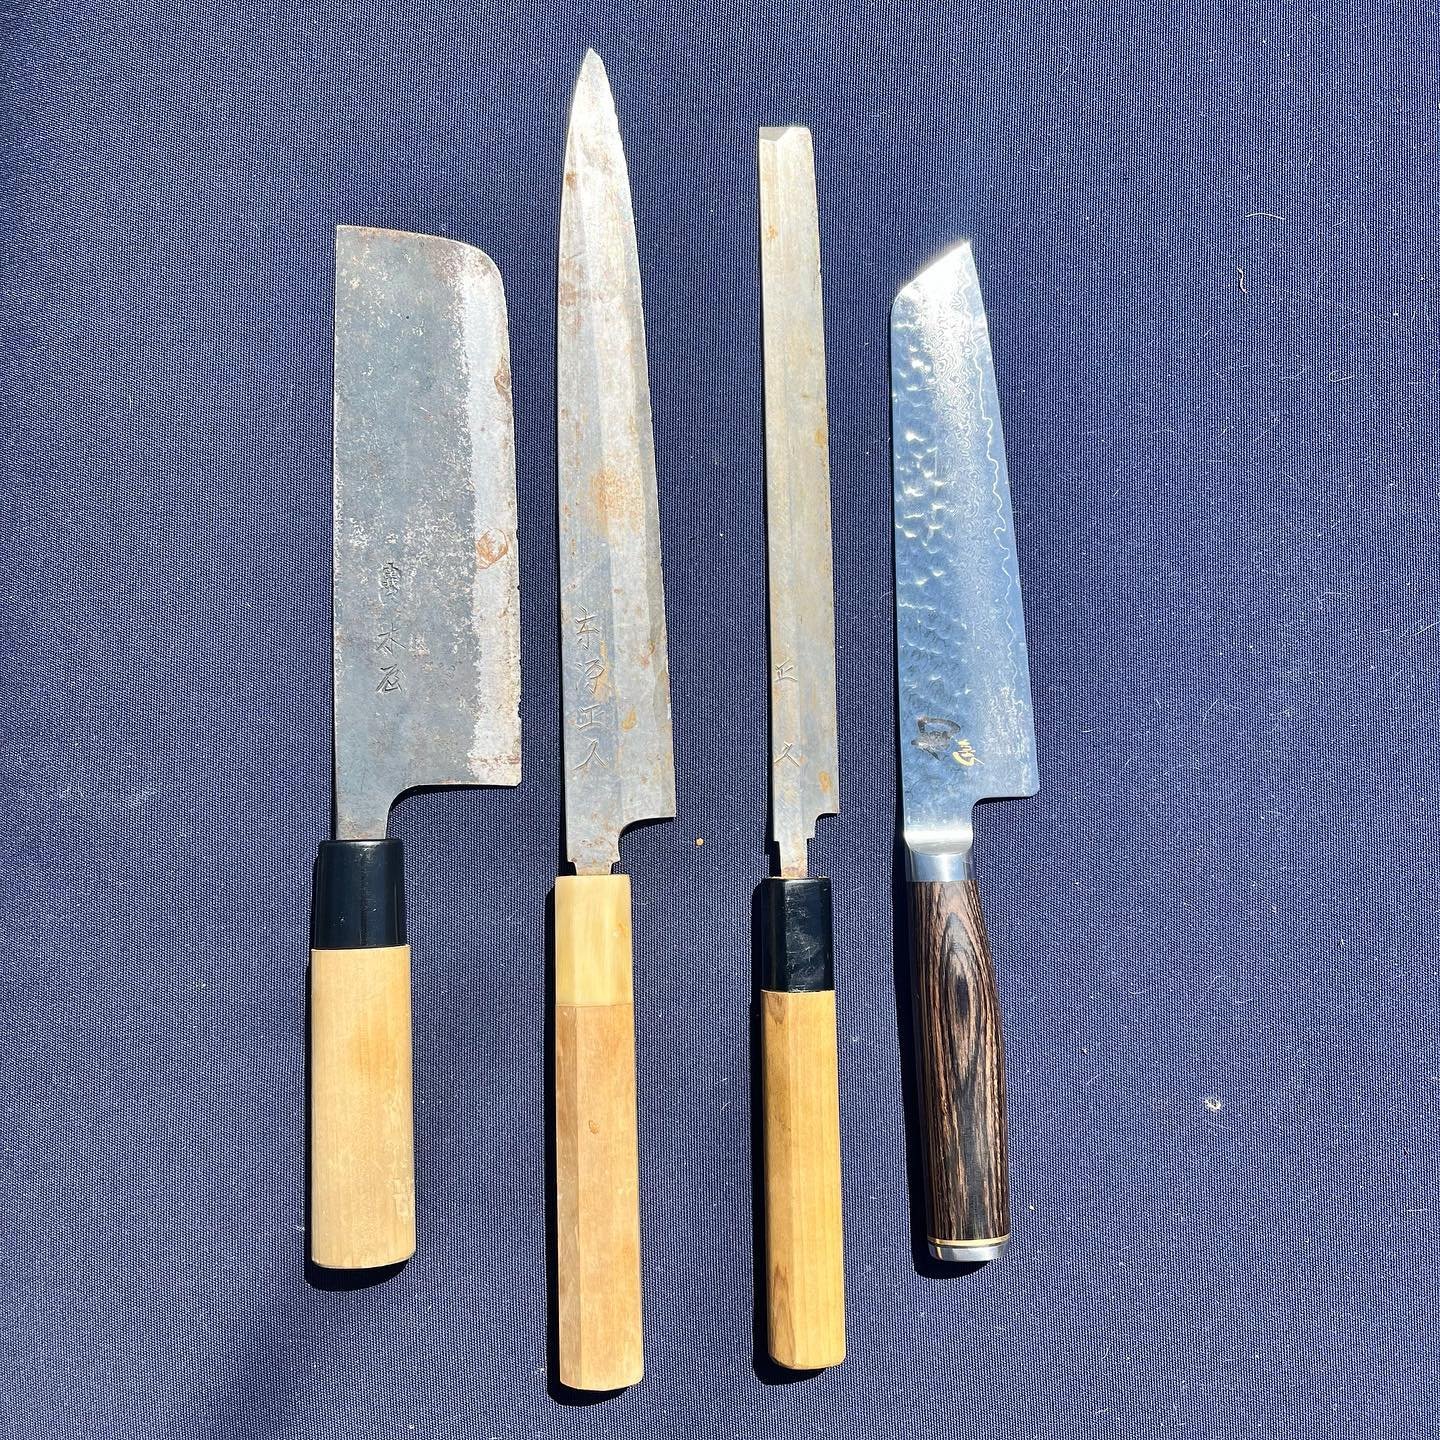 Nice knives - before and after pics - and now all scoring under 200 BESS #sharpcatsharp #knifesharpening #whetstone #whetstonesharpening #japaneseknives